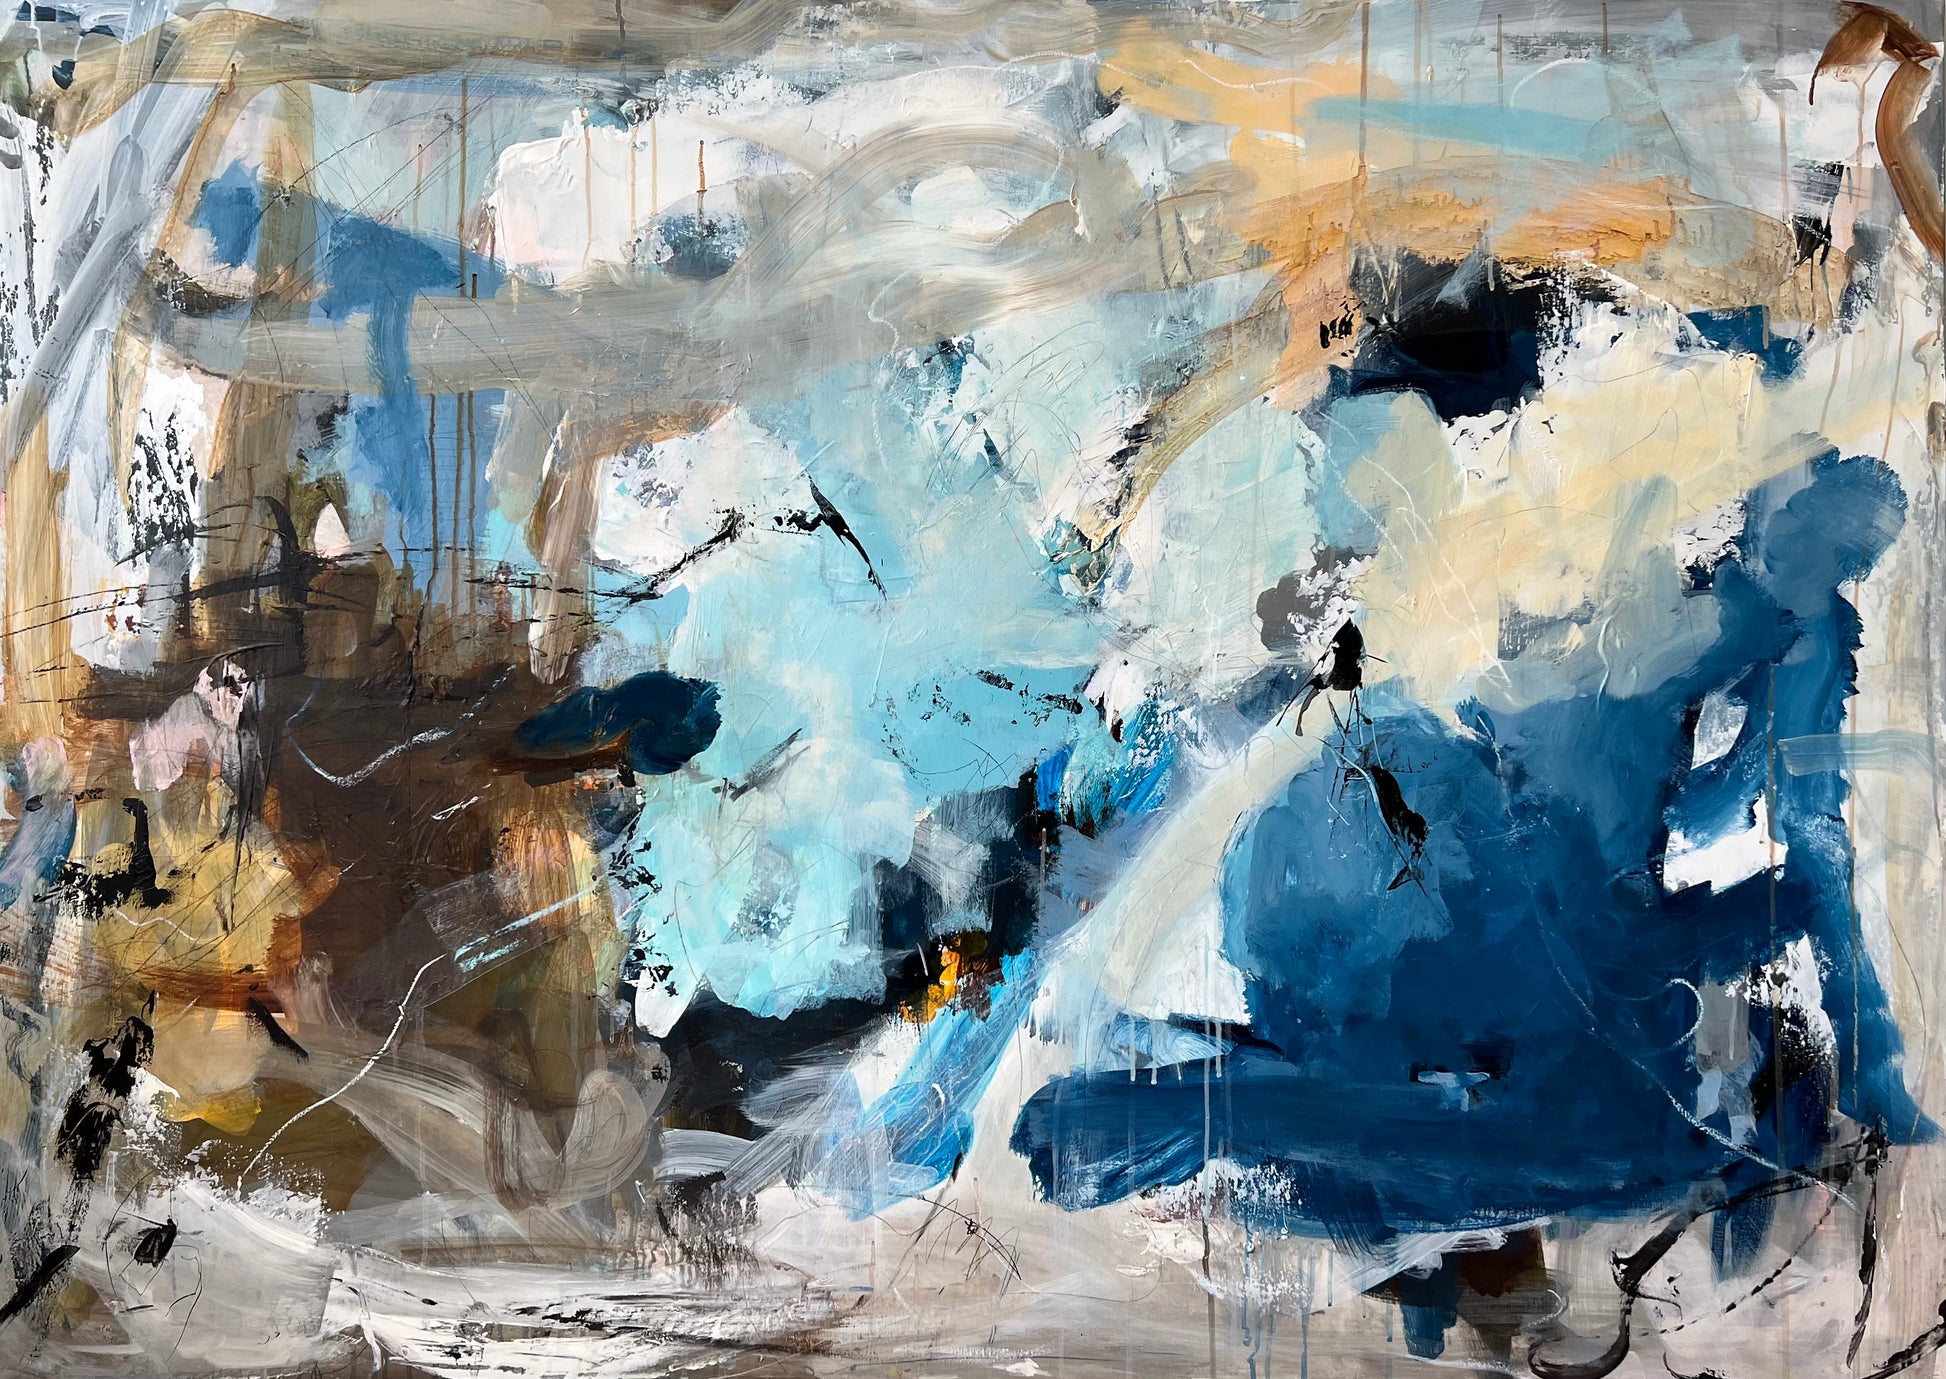 Abstrakt maleri, 140x100 cm, "Ocean" by Lone Reedtz , Abstrakt ekspressivt akrylmaleri på lærred